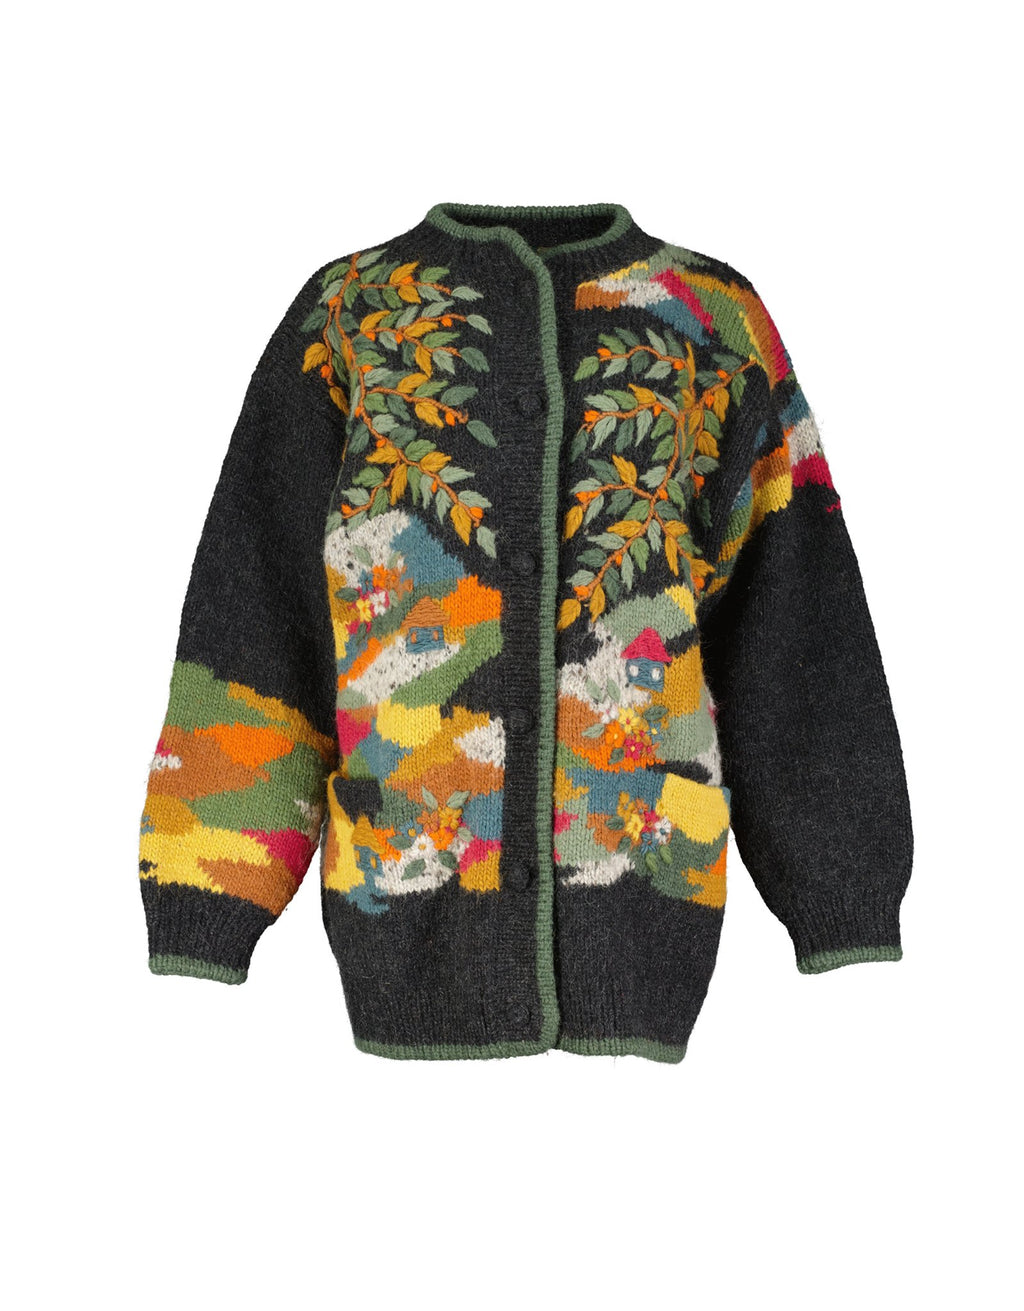 Sirogojno Style Dobrila Scenic Landscape Embroidered Cardigan Coat, Size XL